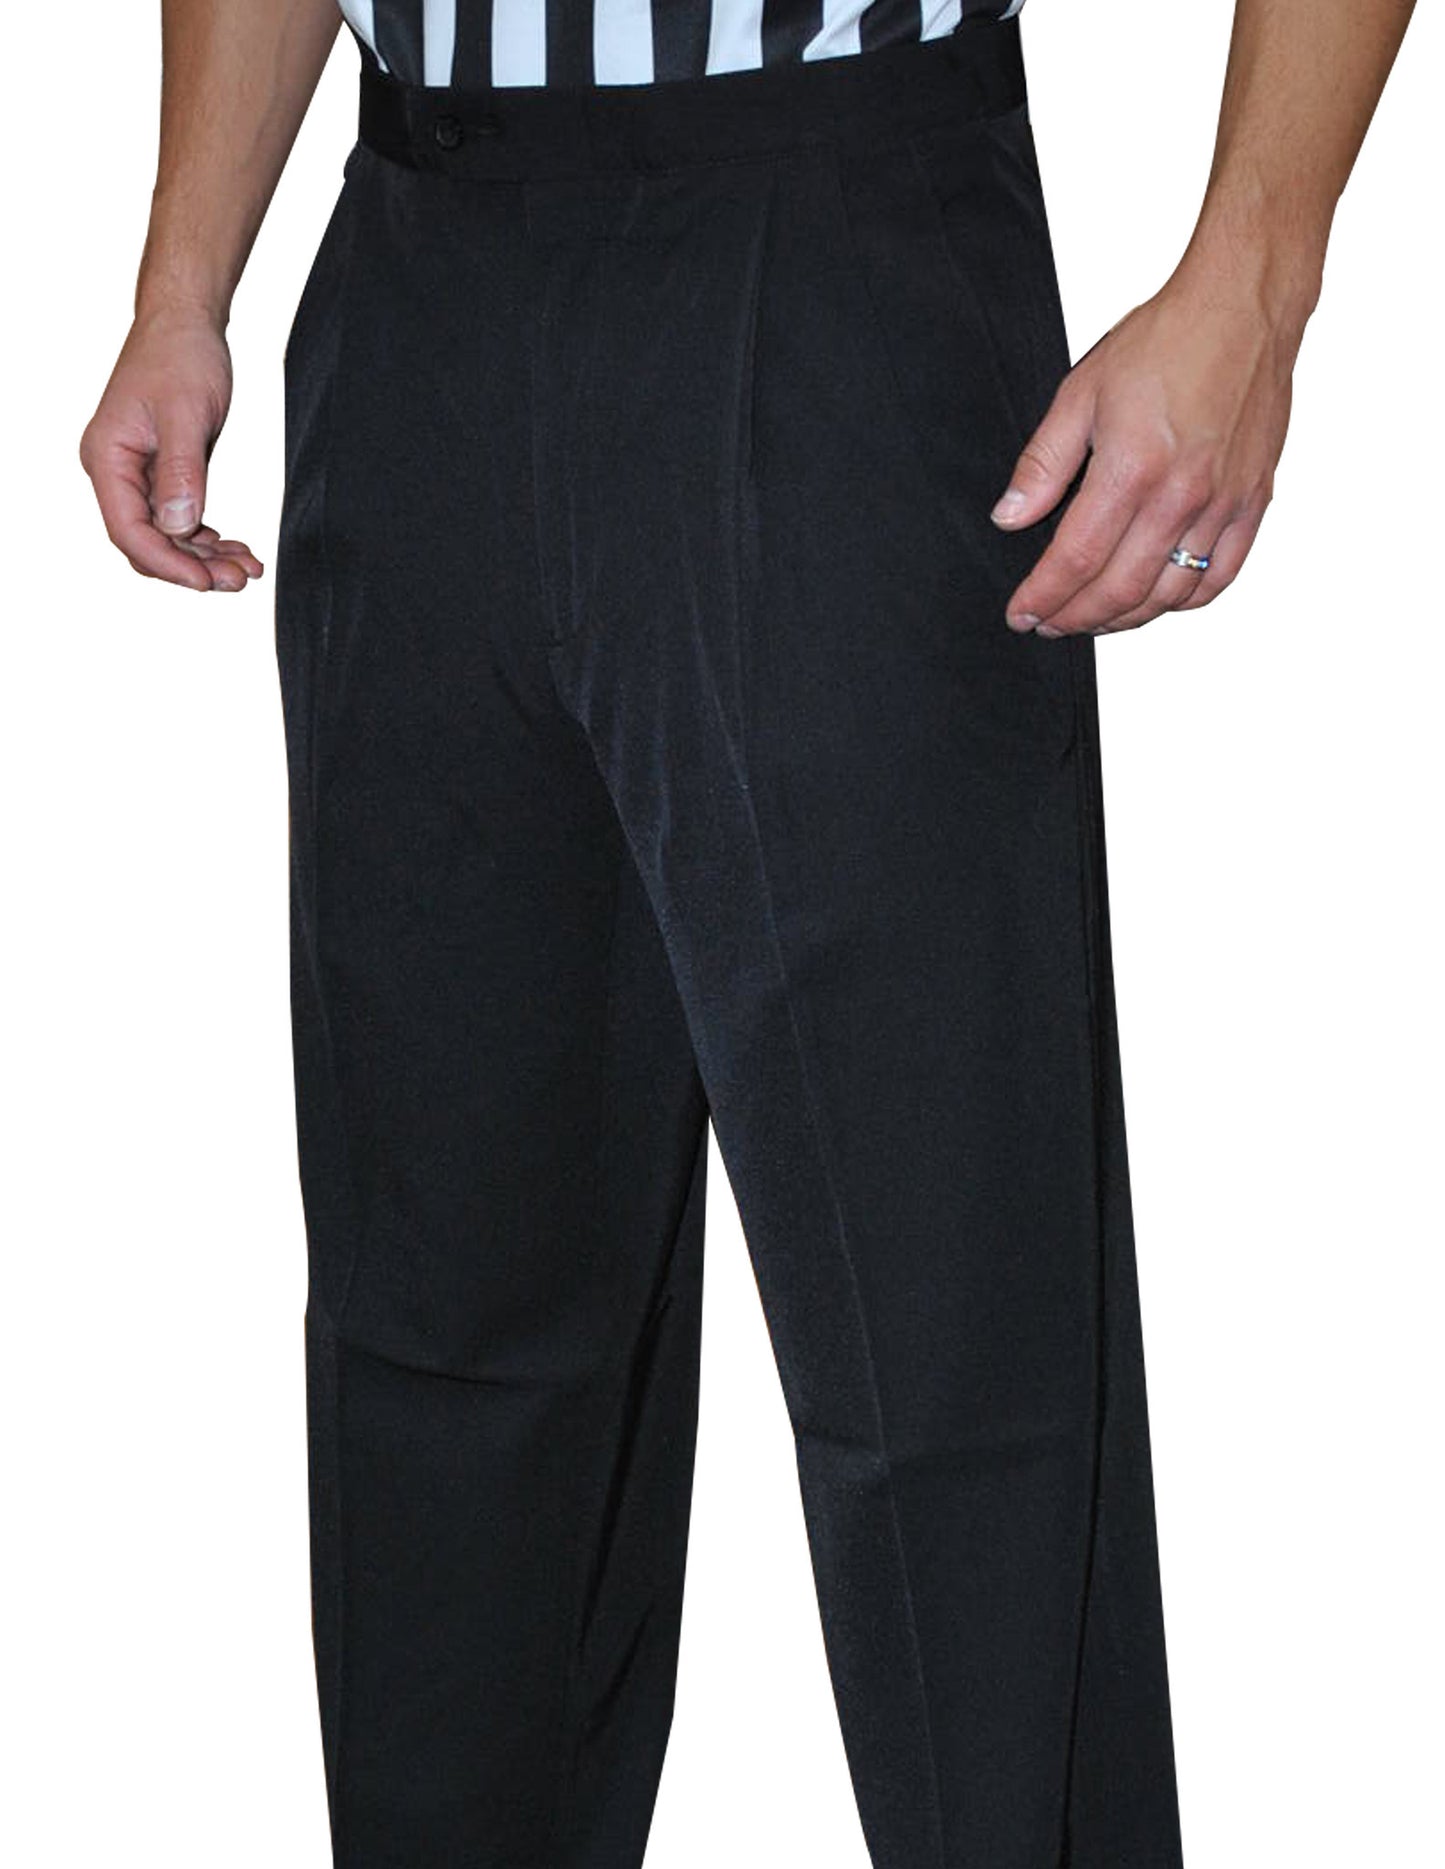 BKS271-Smitty 100% Polyester Pleated Pants w/ Slash Pockets